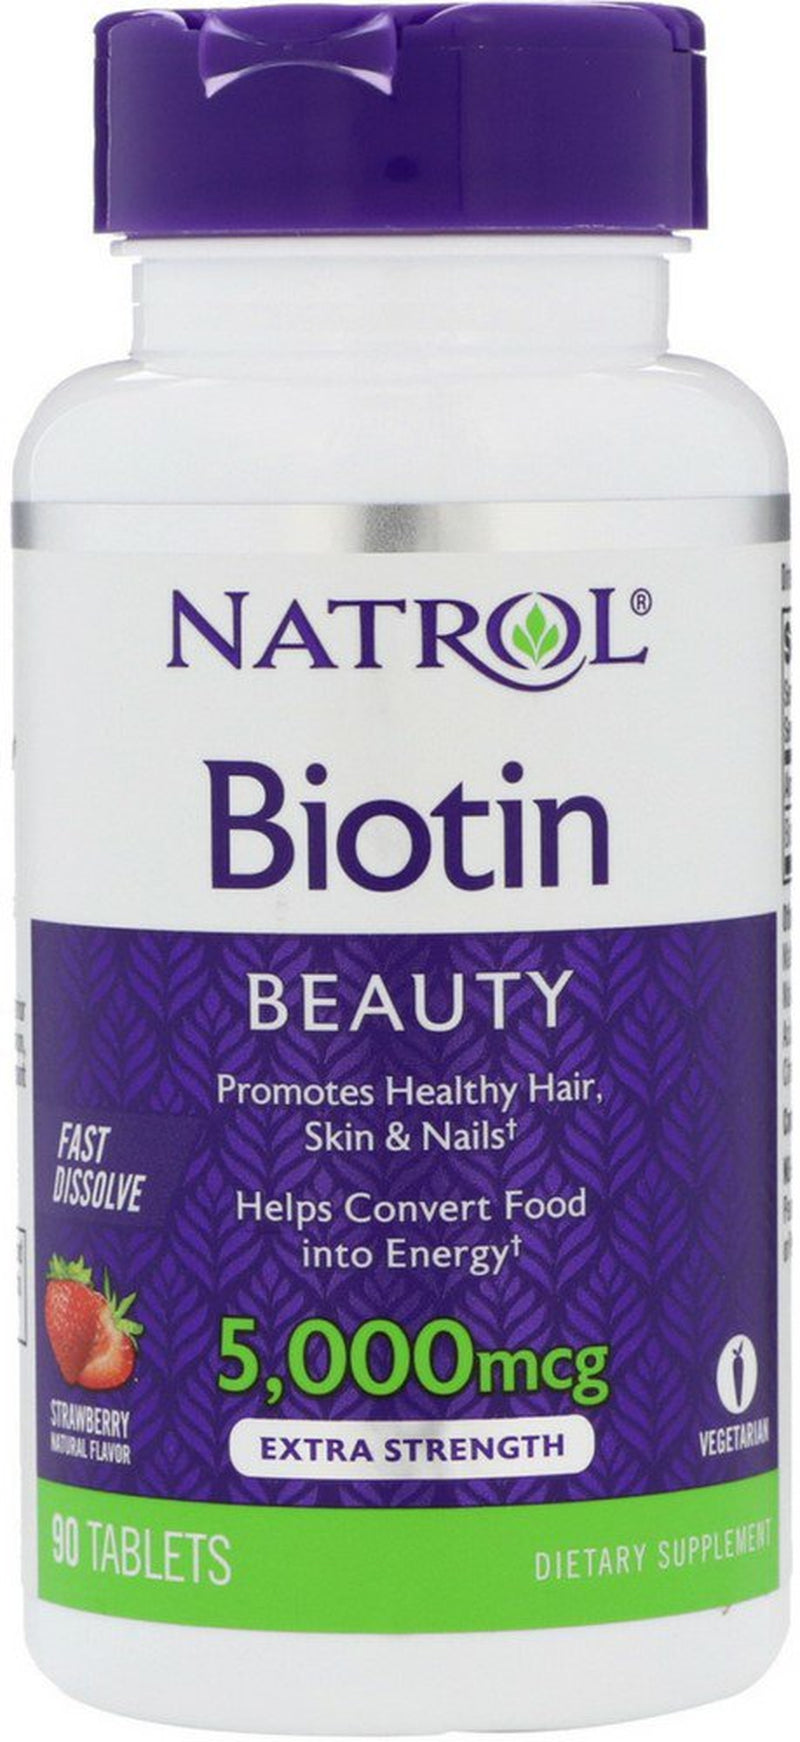 Natrol Biotin 5,000Mcg Fast Dissolve, 90 Tablets (Pack of 3)